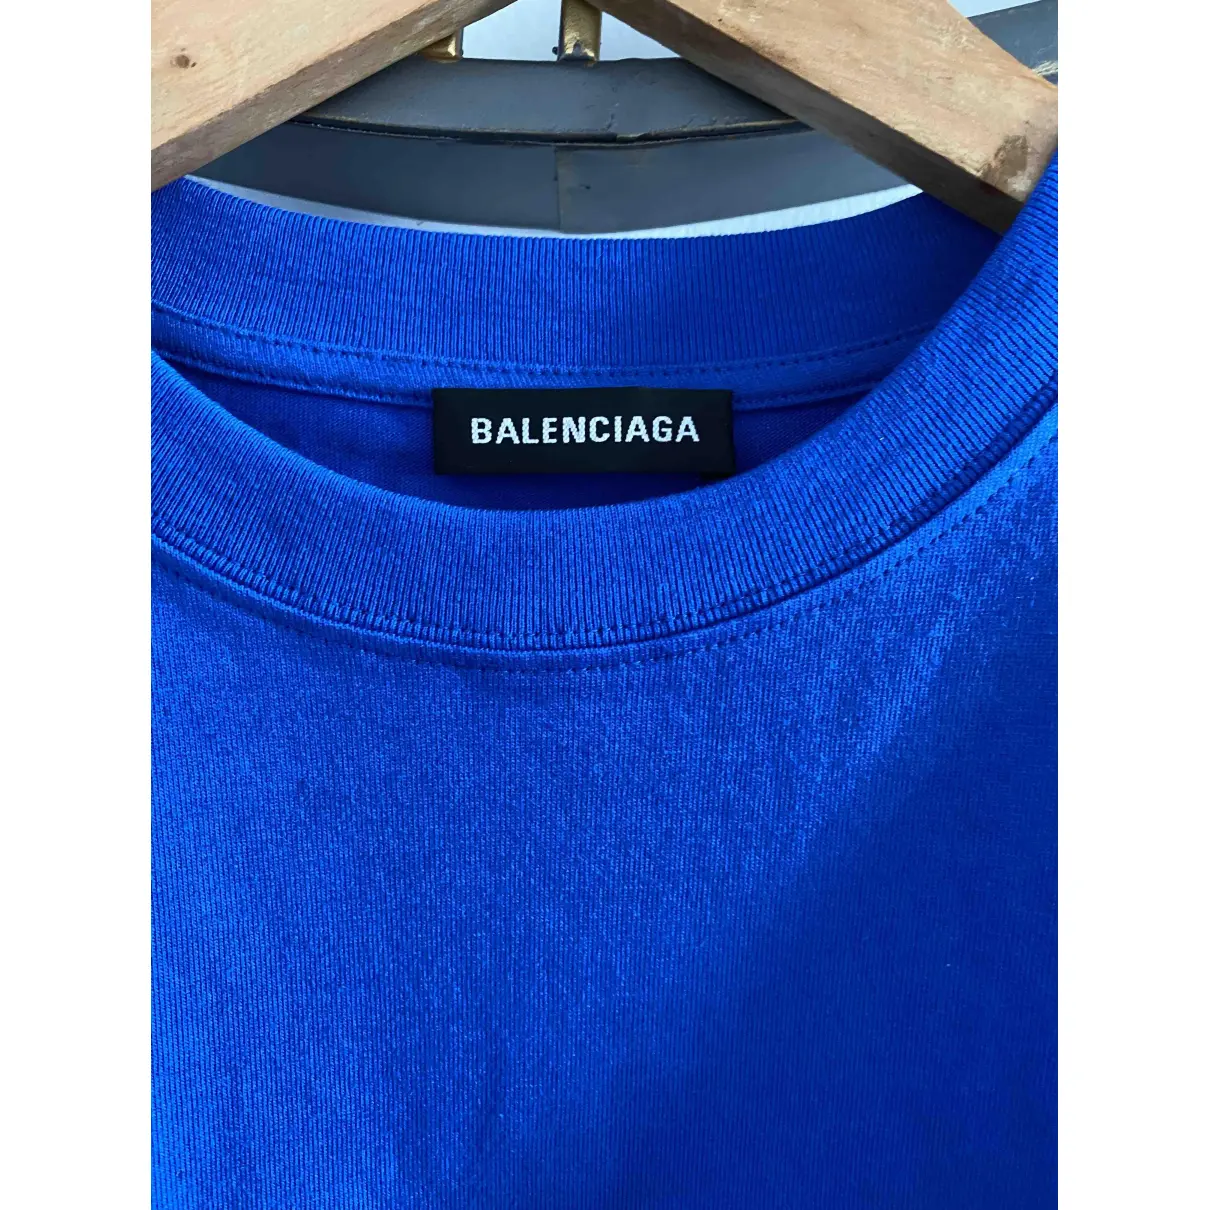 Buy Balenciaga Blue Cotton T-shirt online